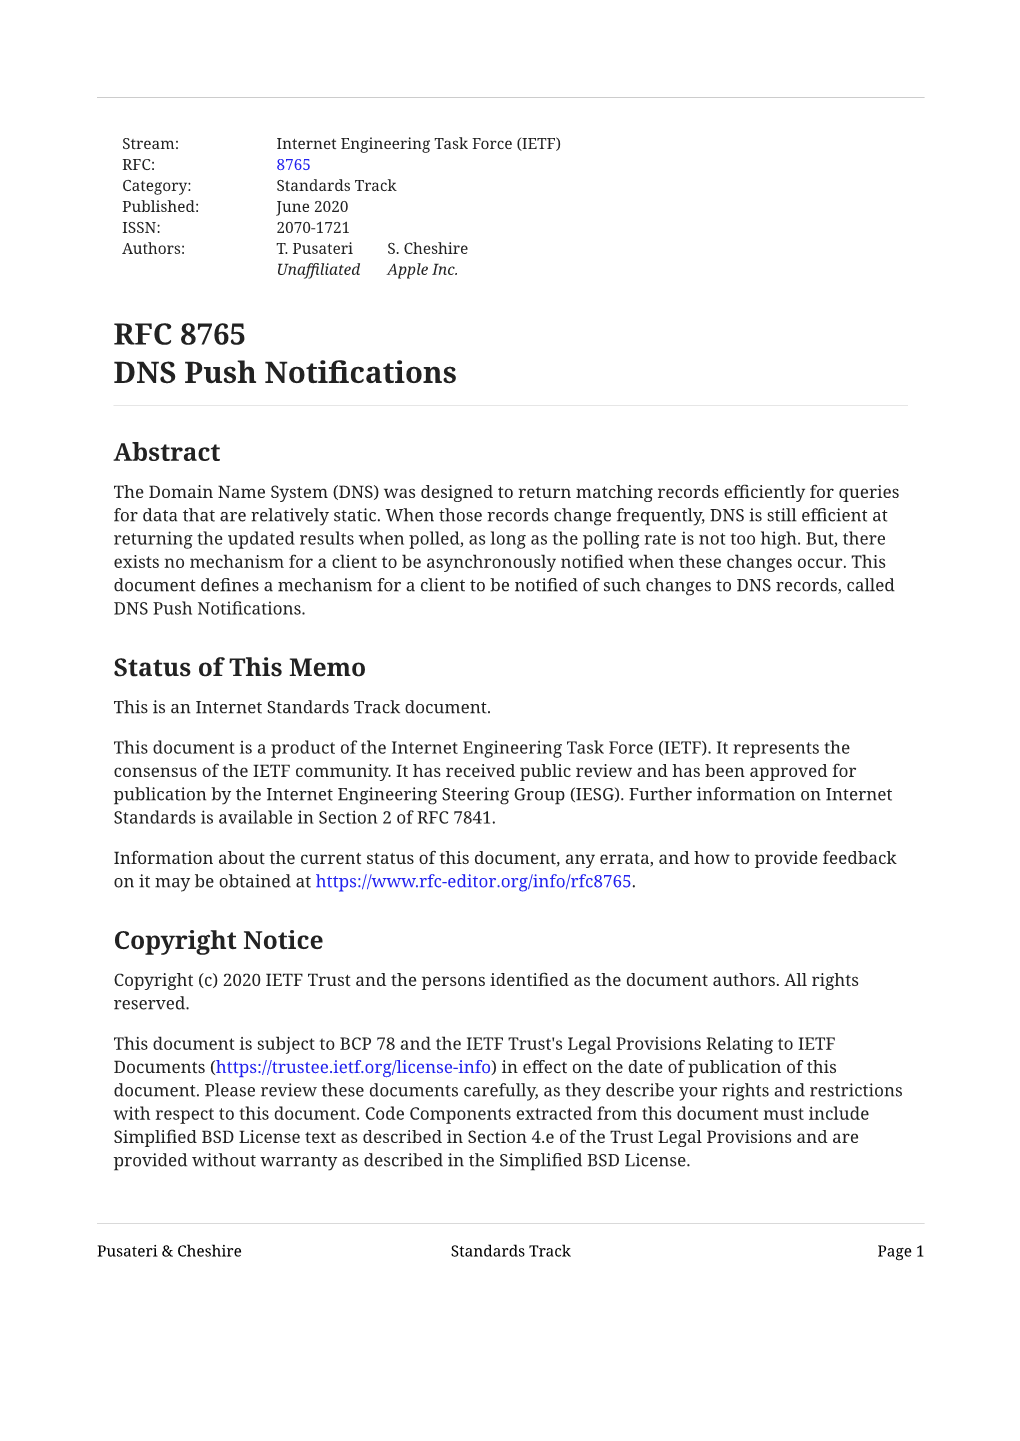 RFC 8765: DNS Push Notifications